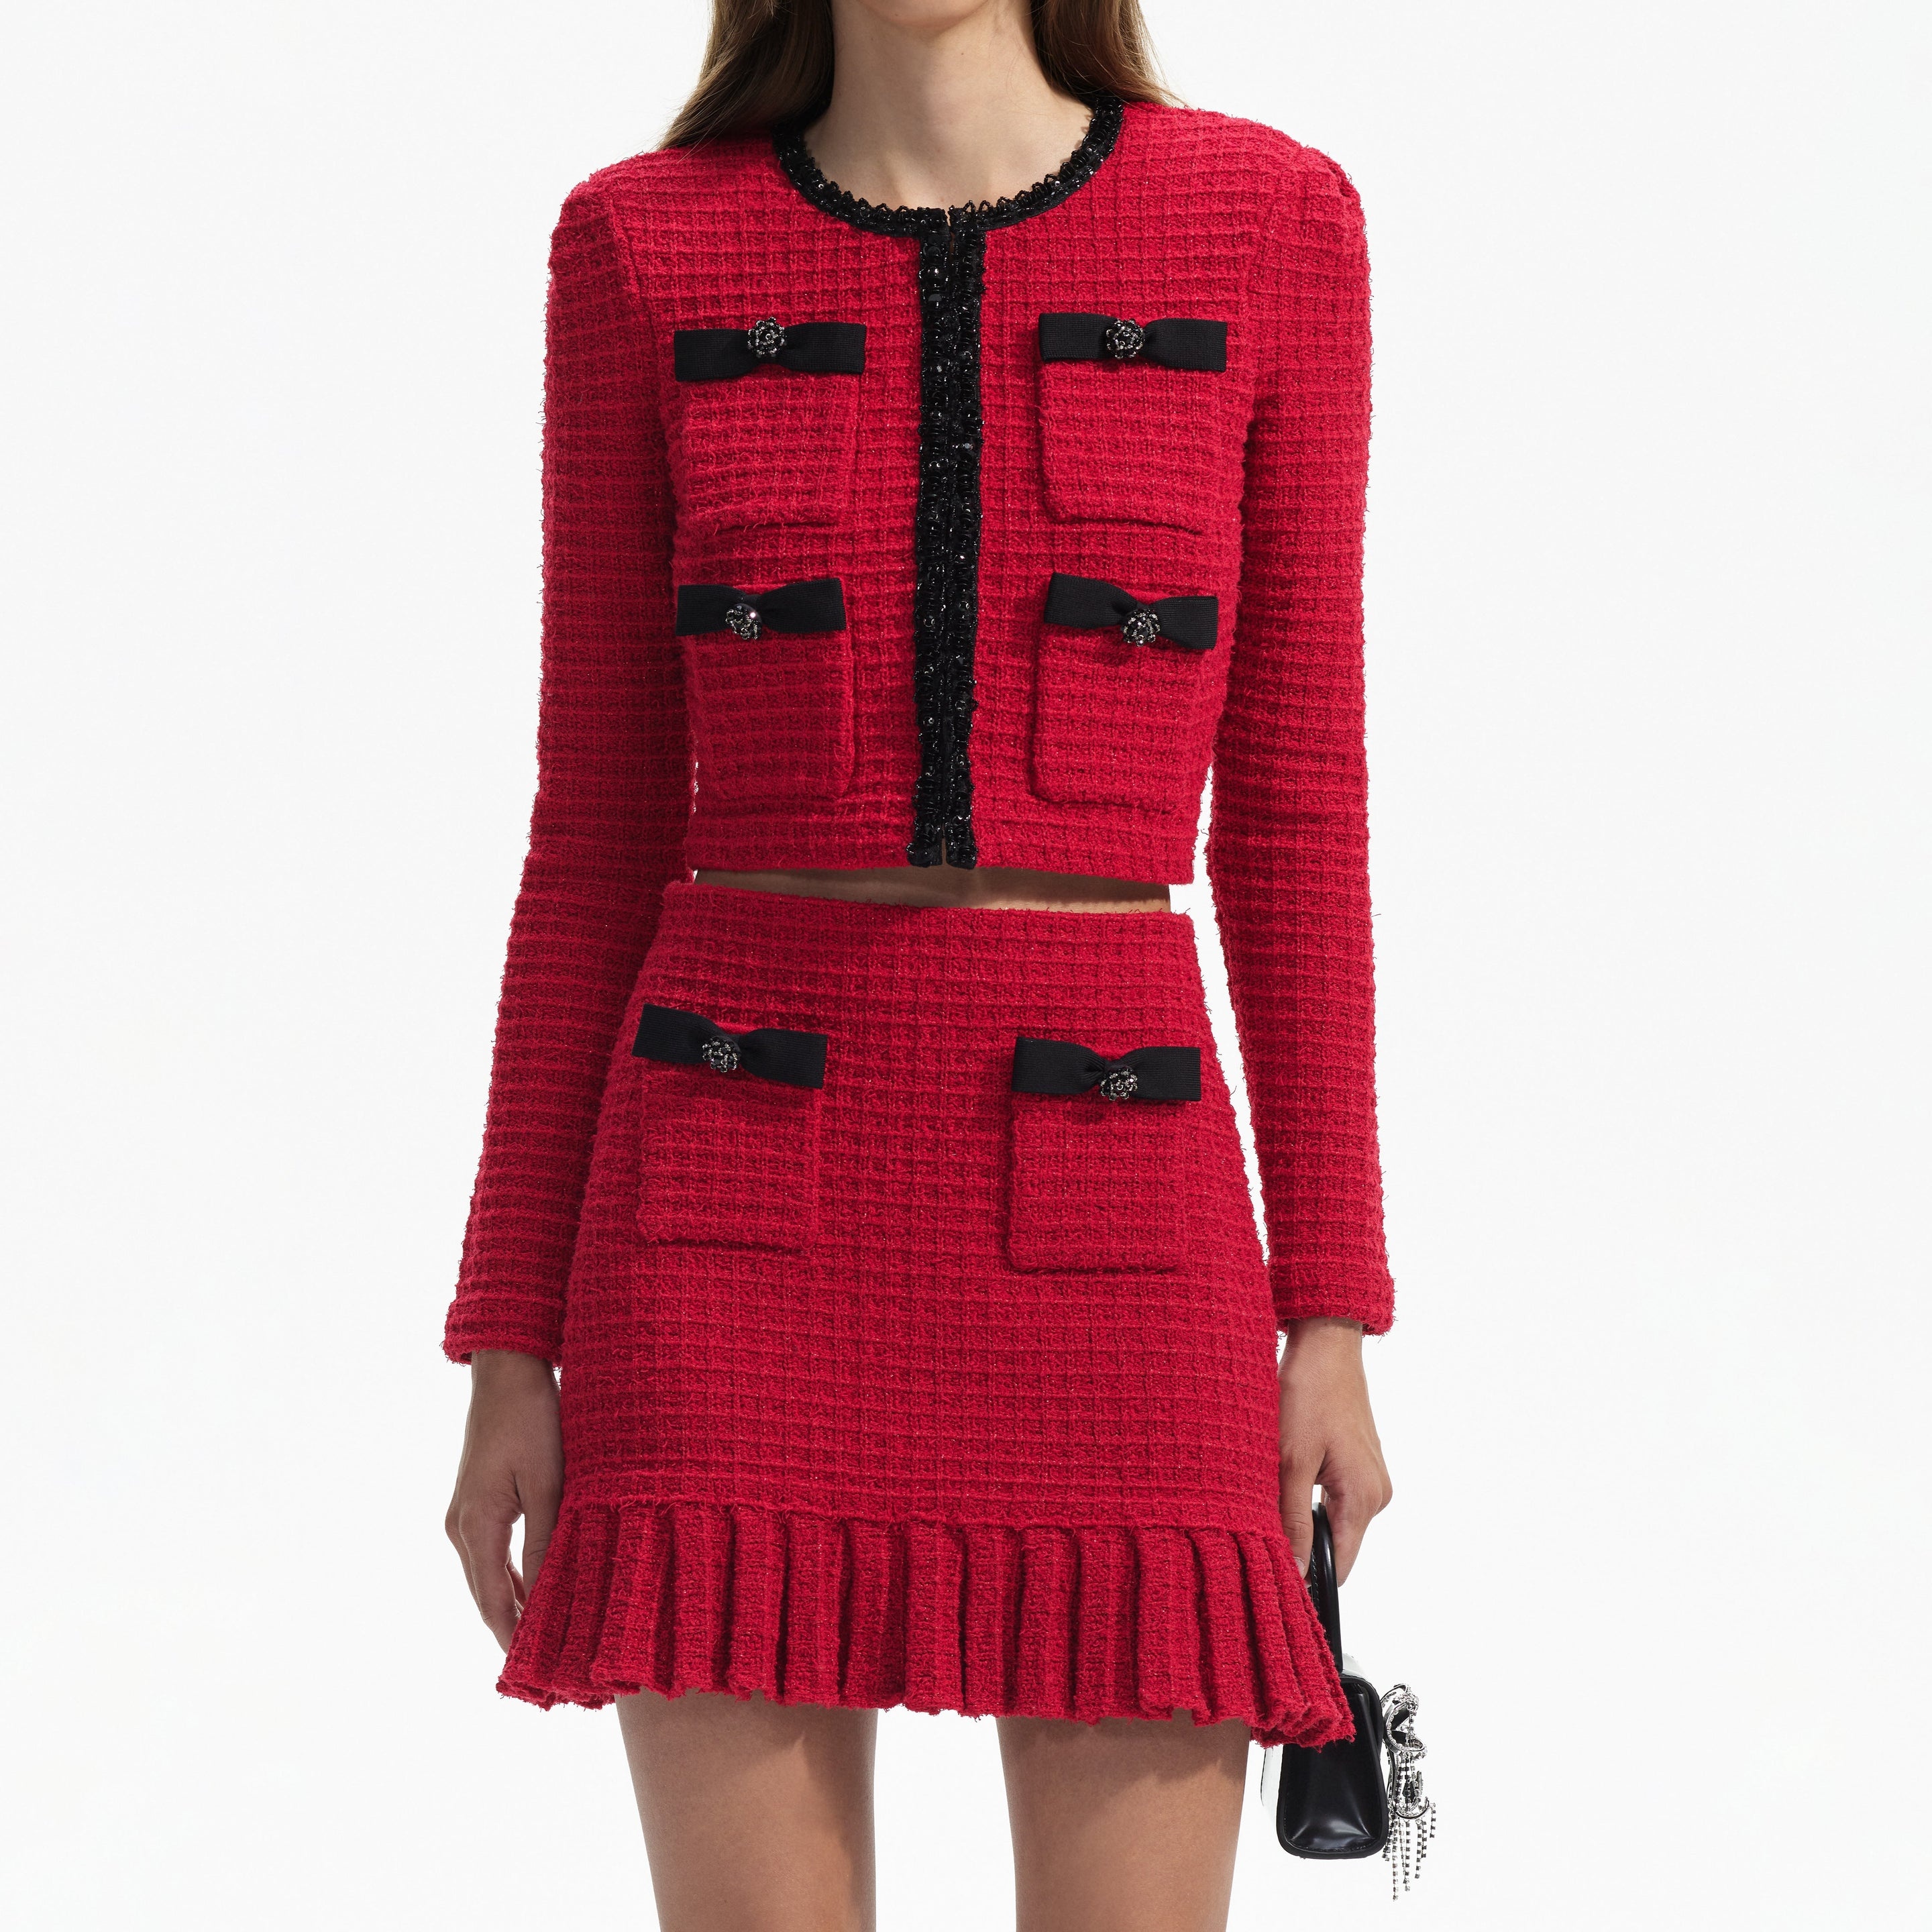 Red Knit Mini Skirt - 4